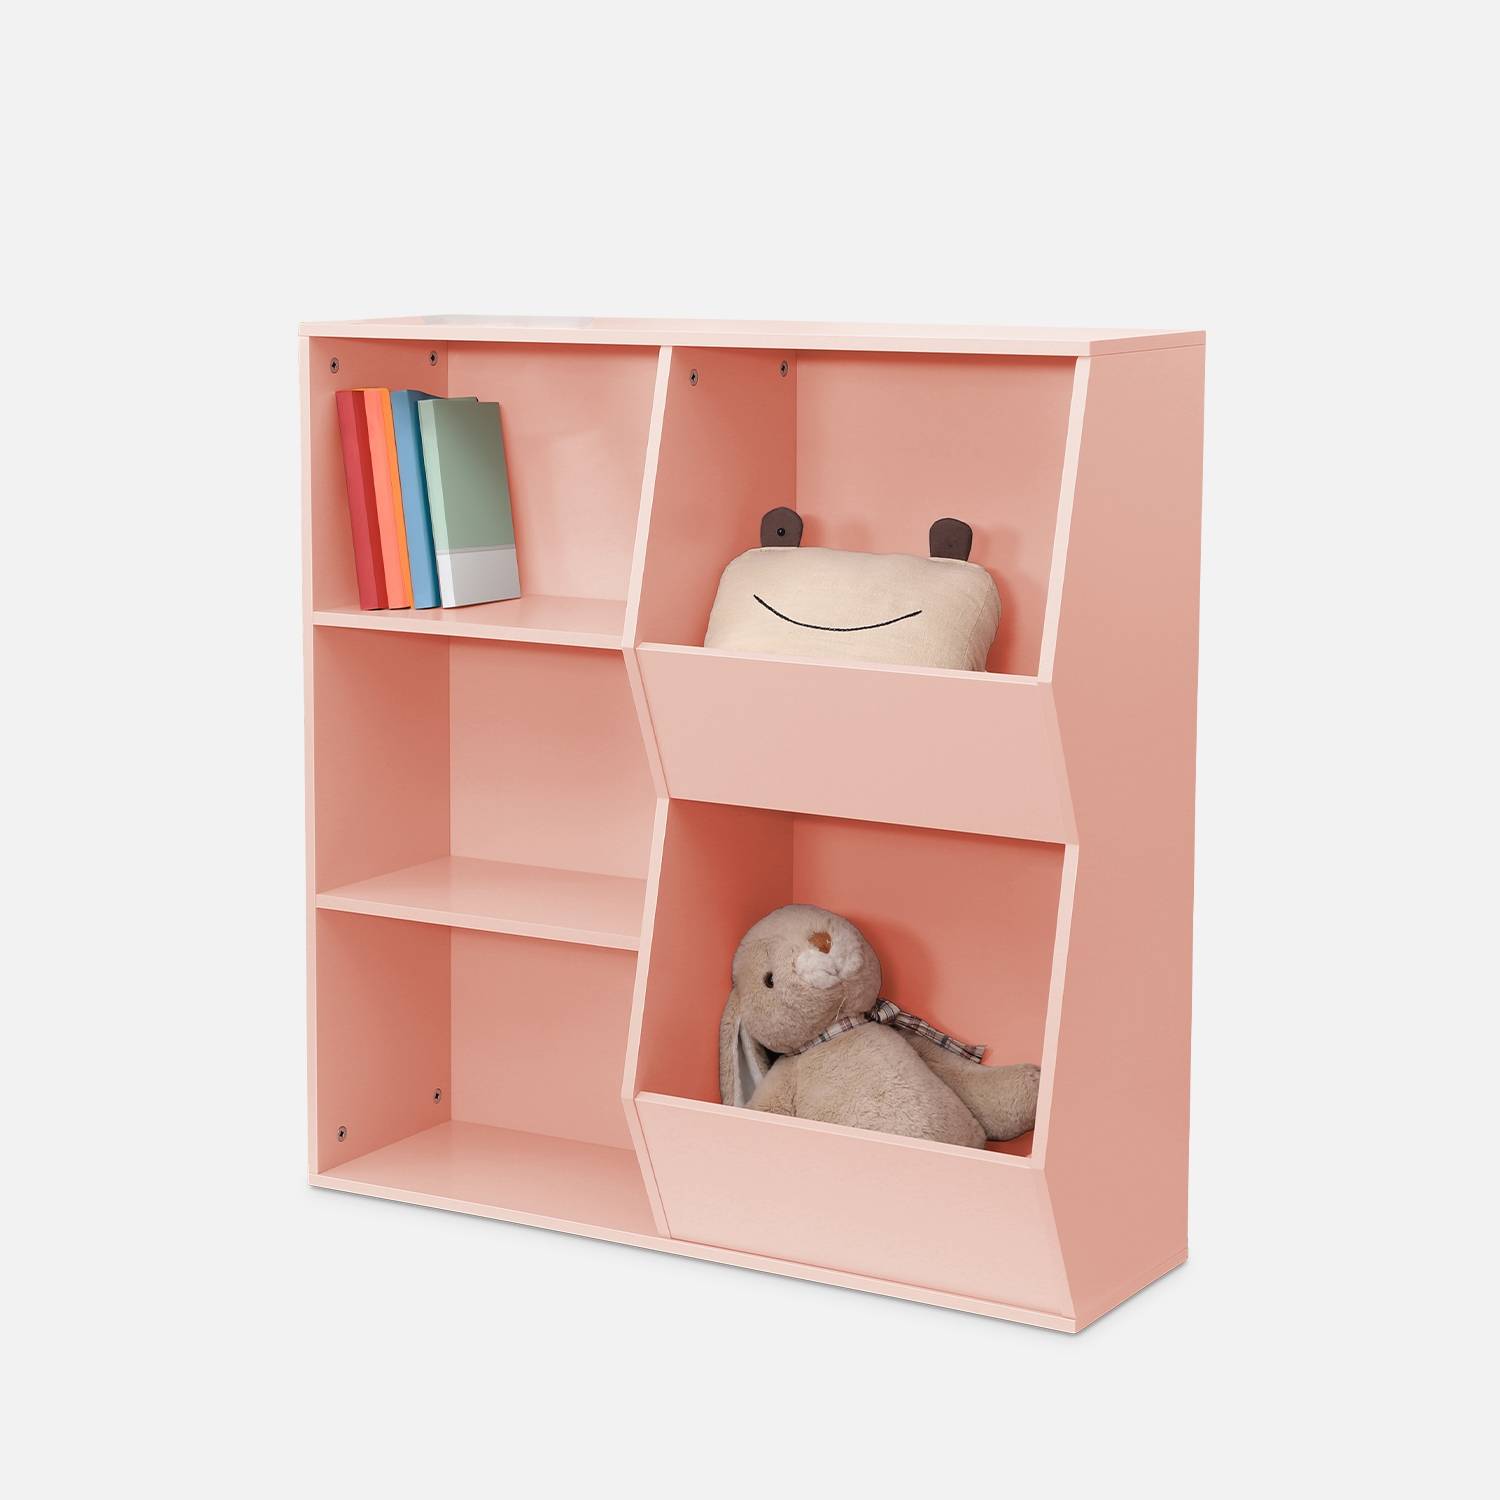 Children's storage unit, 3 shelves and 2 storage spaces, Pink